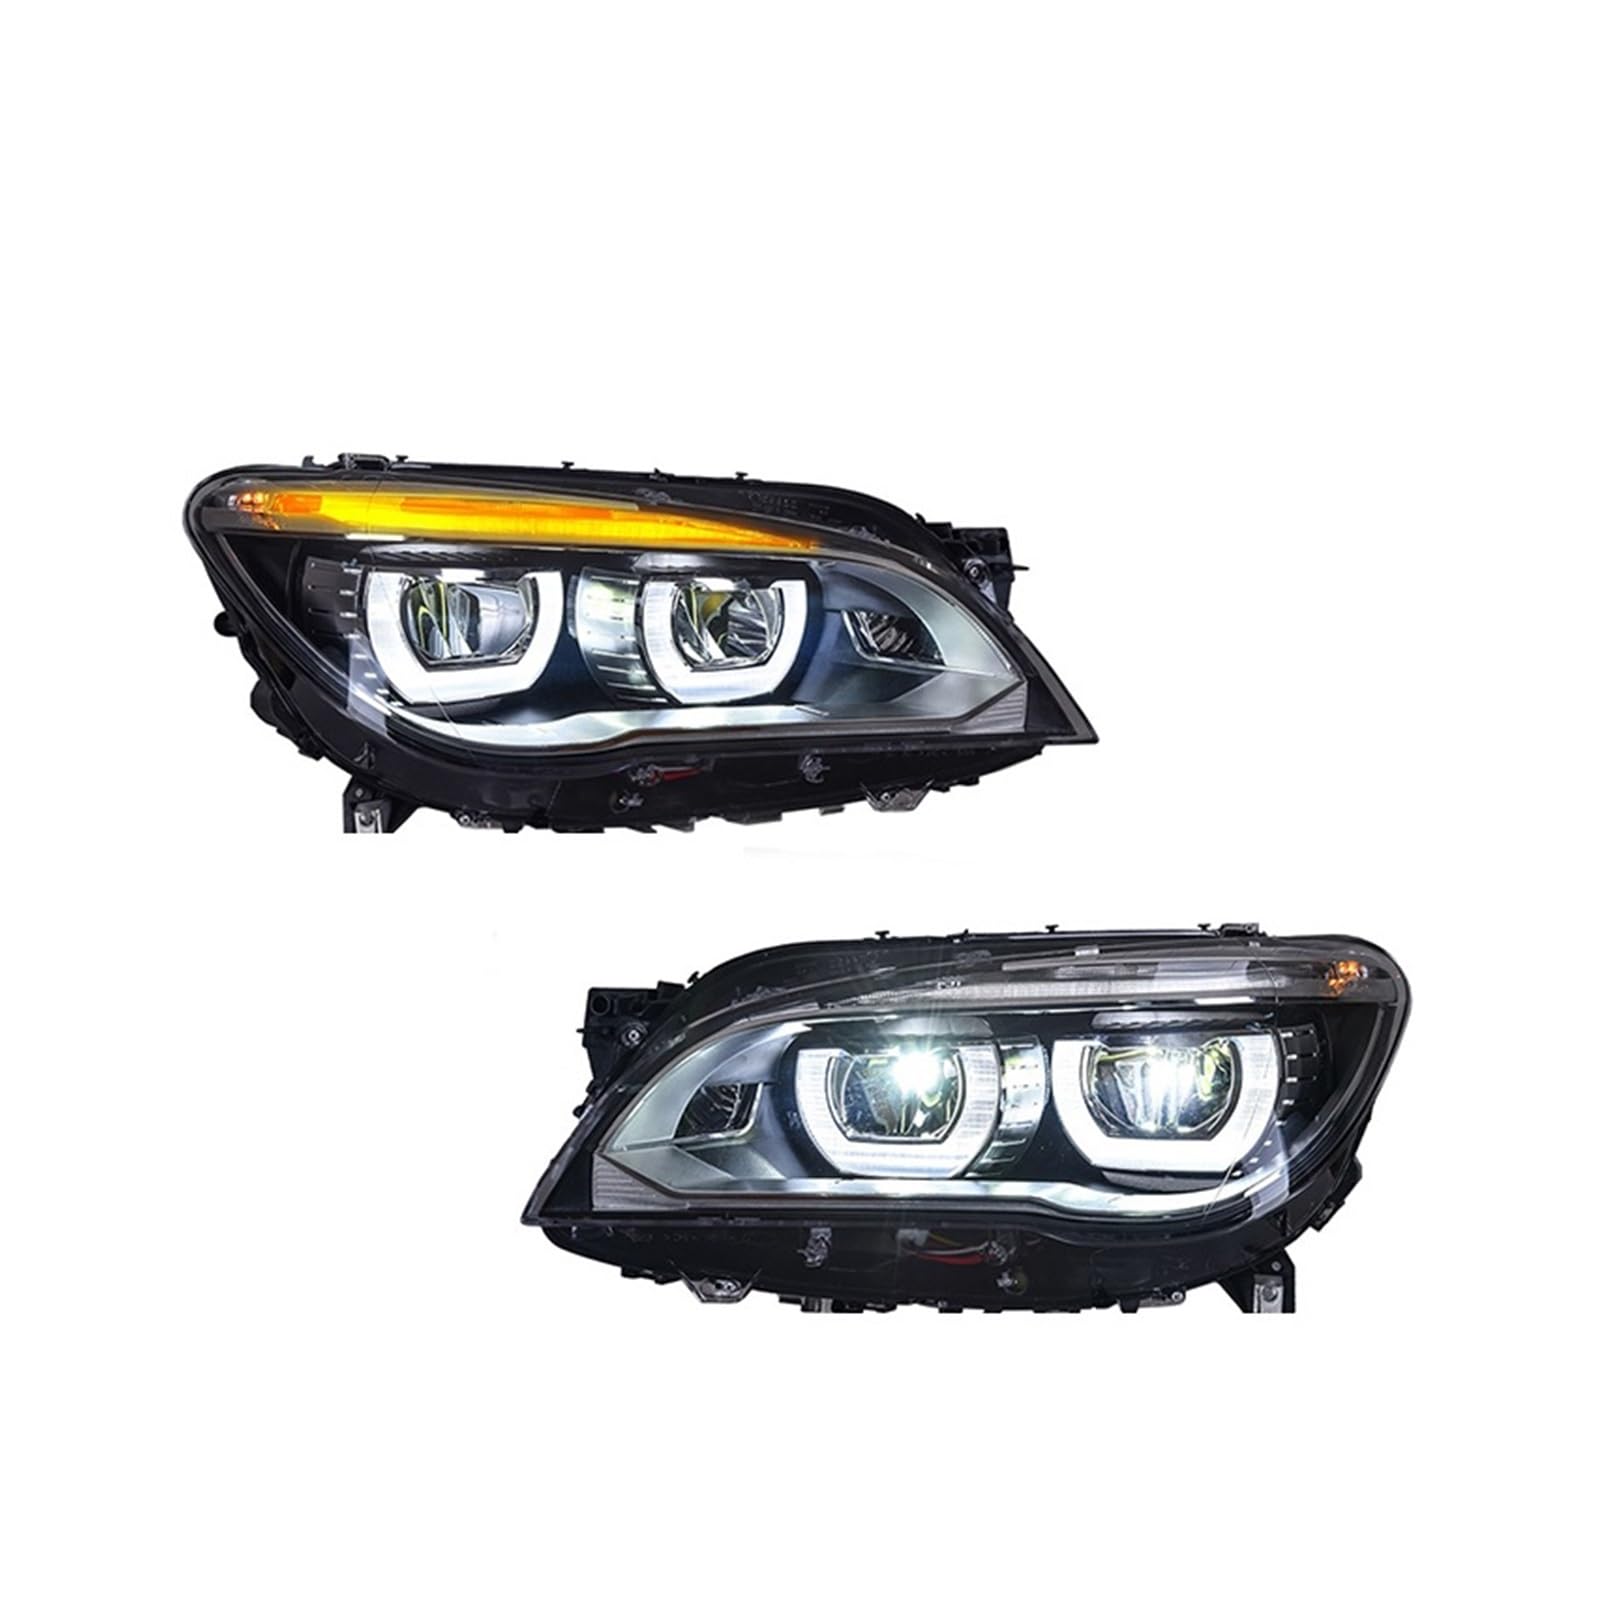 LED-Scheinwerfer kompatibel for BMW F01 F02 2007–2015 730i 735i 740i, LED-Tagfahrlicht, LED-Blinker, vordere Lampenbaugruppe(2014-2015 Year) von LIINYTG